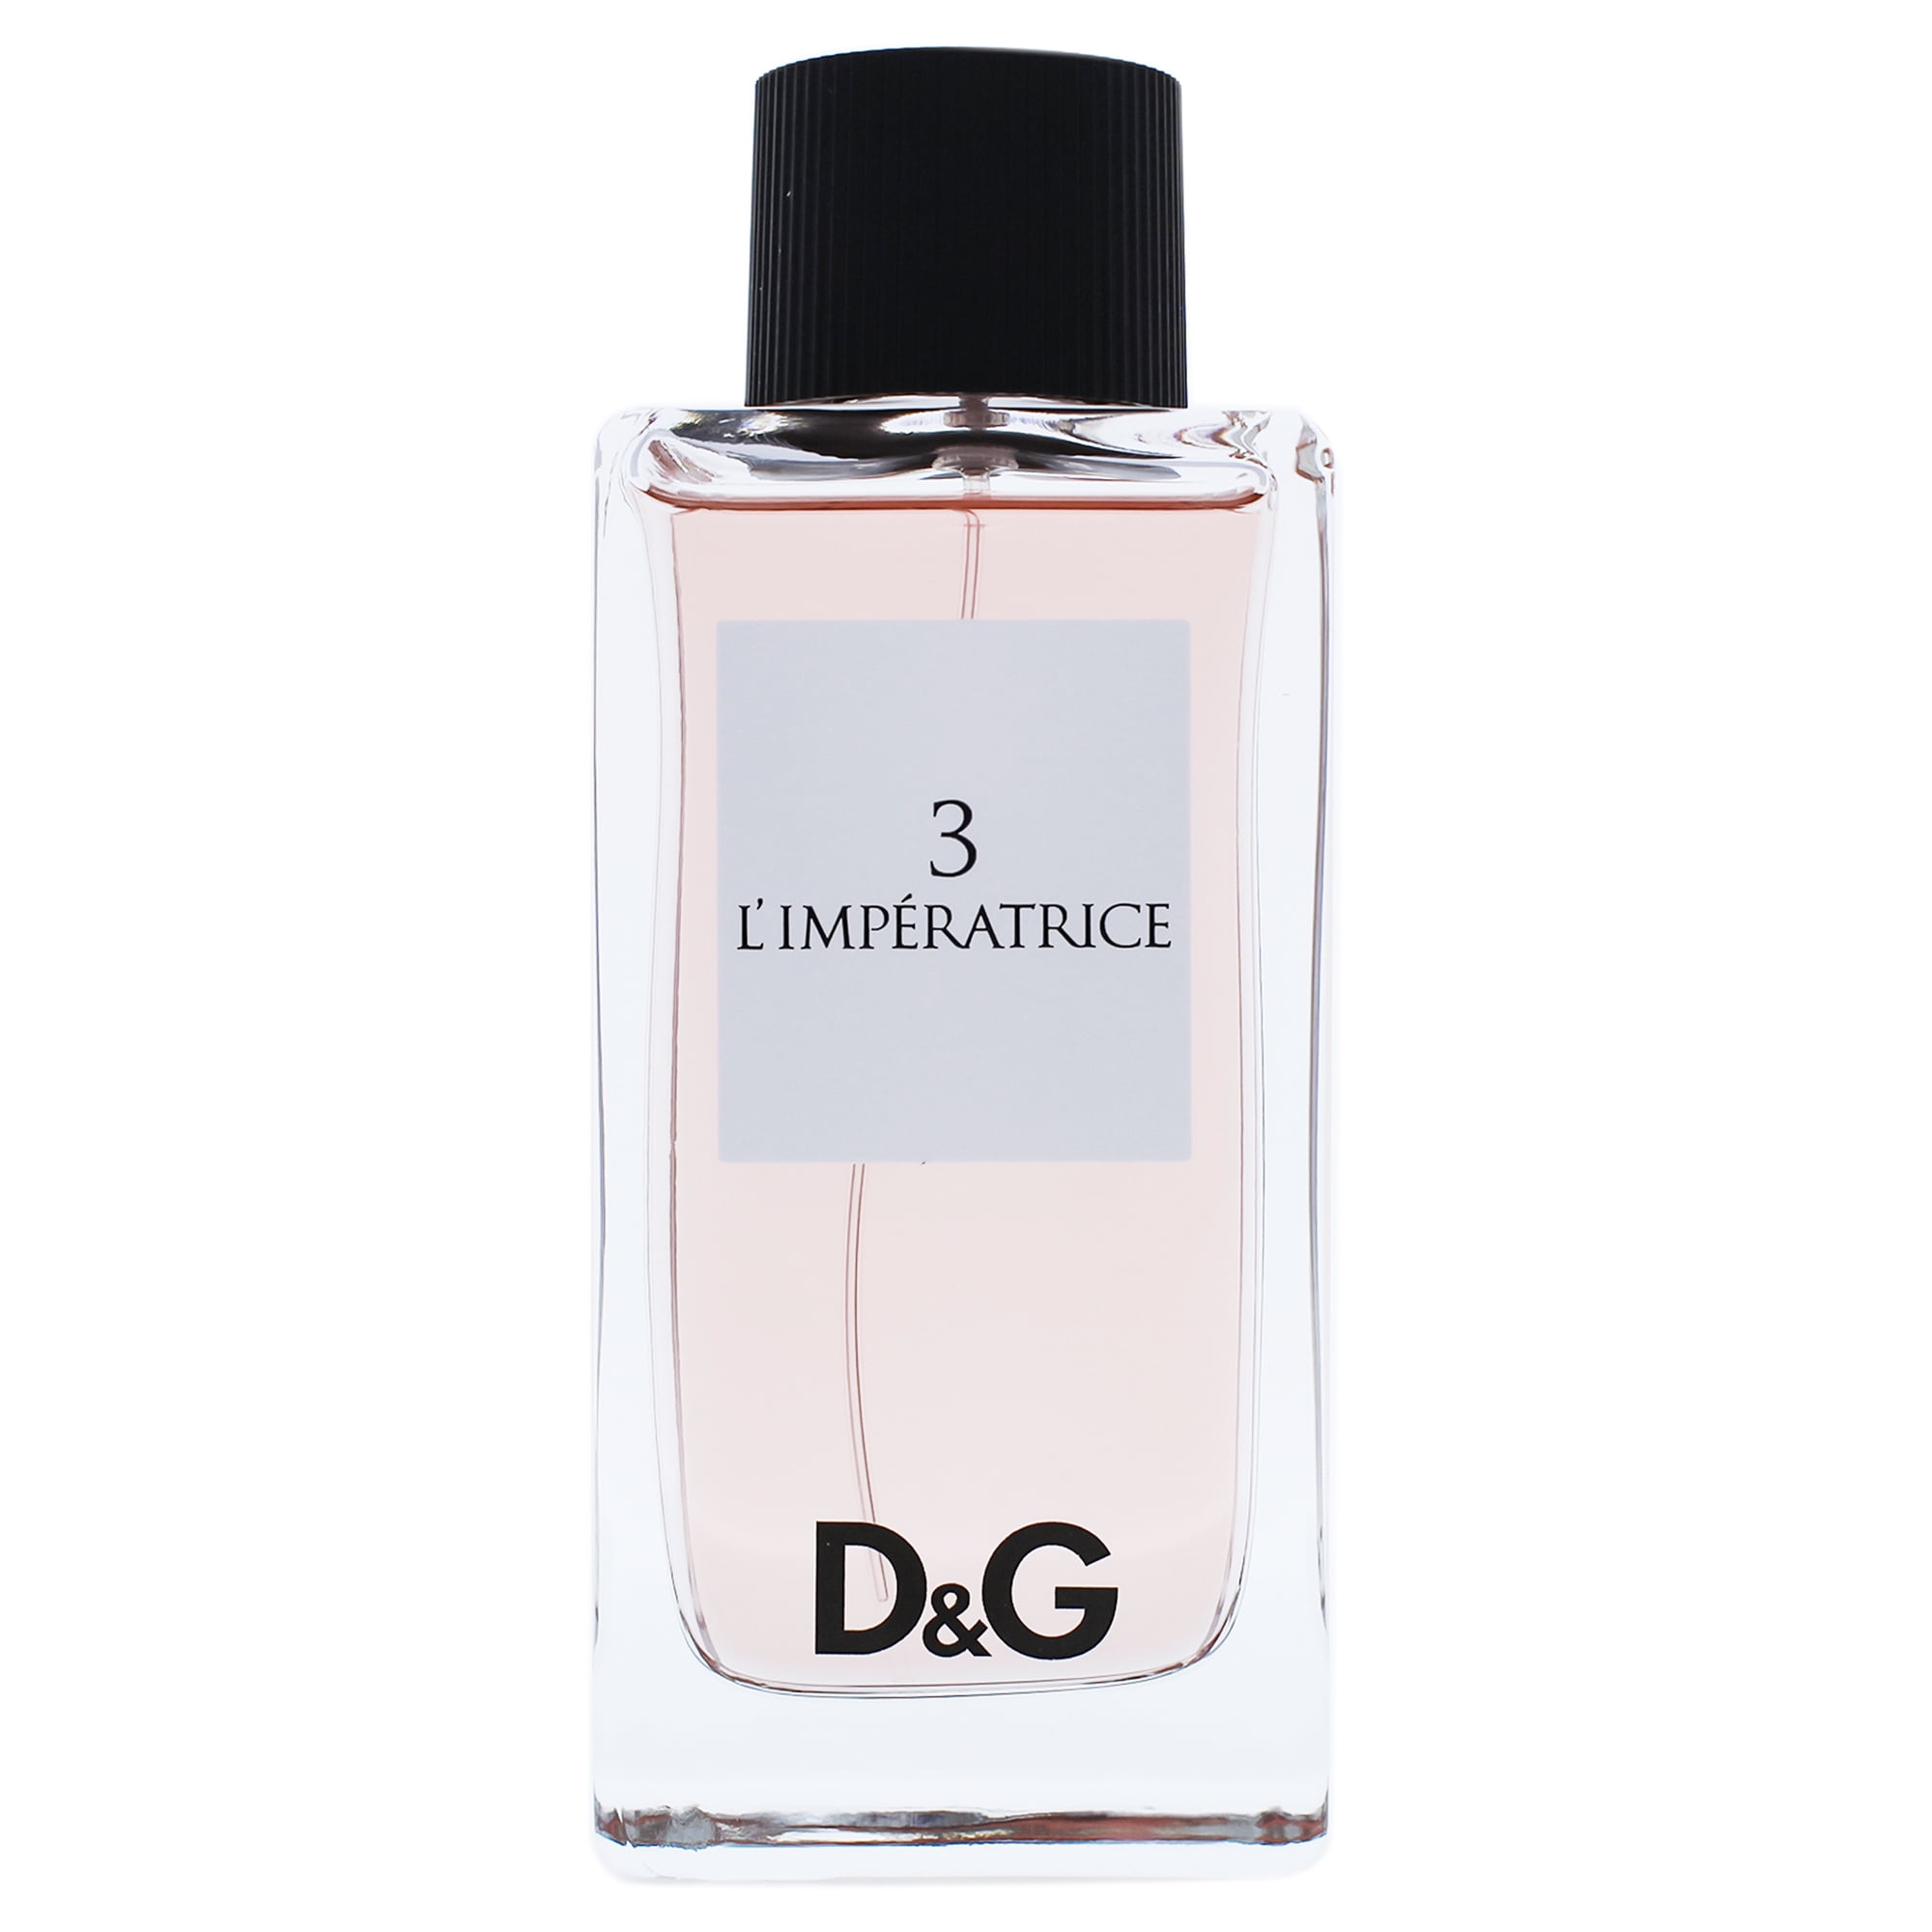 efterspørgsel Desværre amplifikation Dolce & Gabbana #3 L'Imperatrice Eau De Toilette Spray, Perfume for Women,  3.3 Oz - Walmart.com